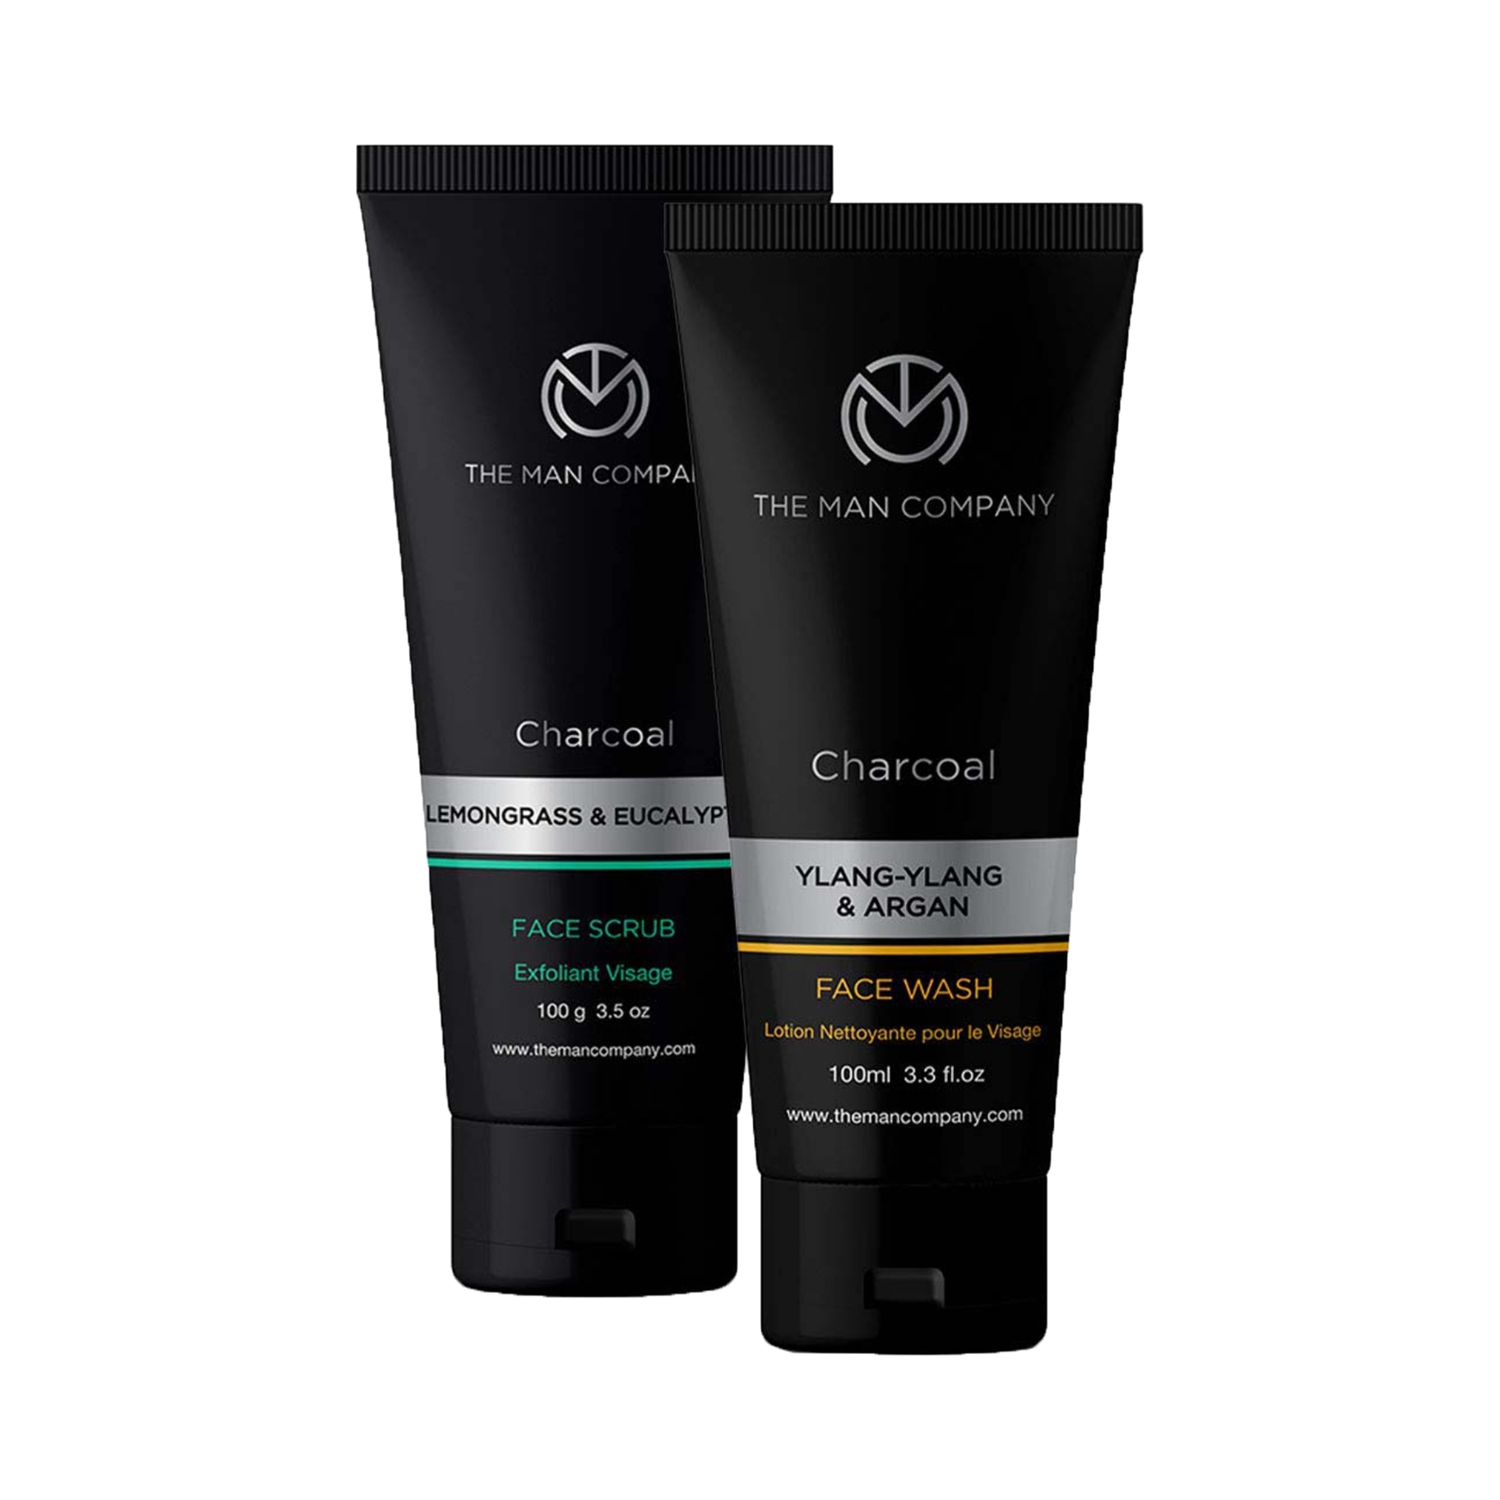 The Man Company | The Man Company De Tan Charcoal Face Scrub & Face Wash Combo (2Pcs)